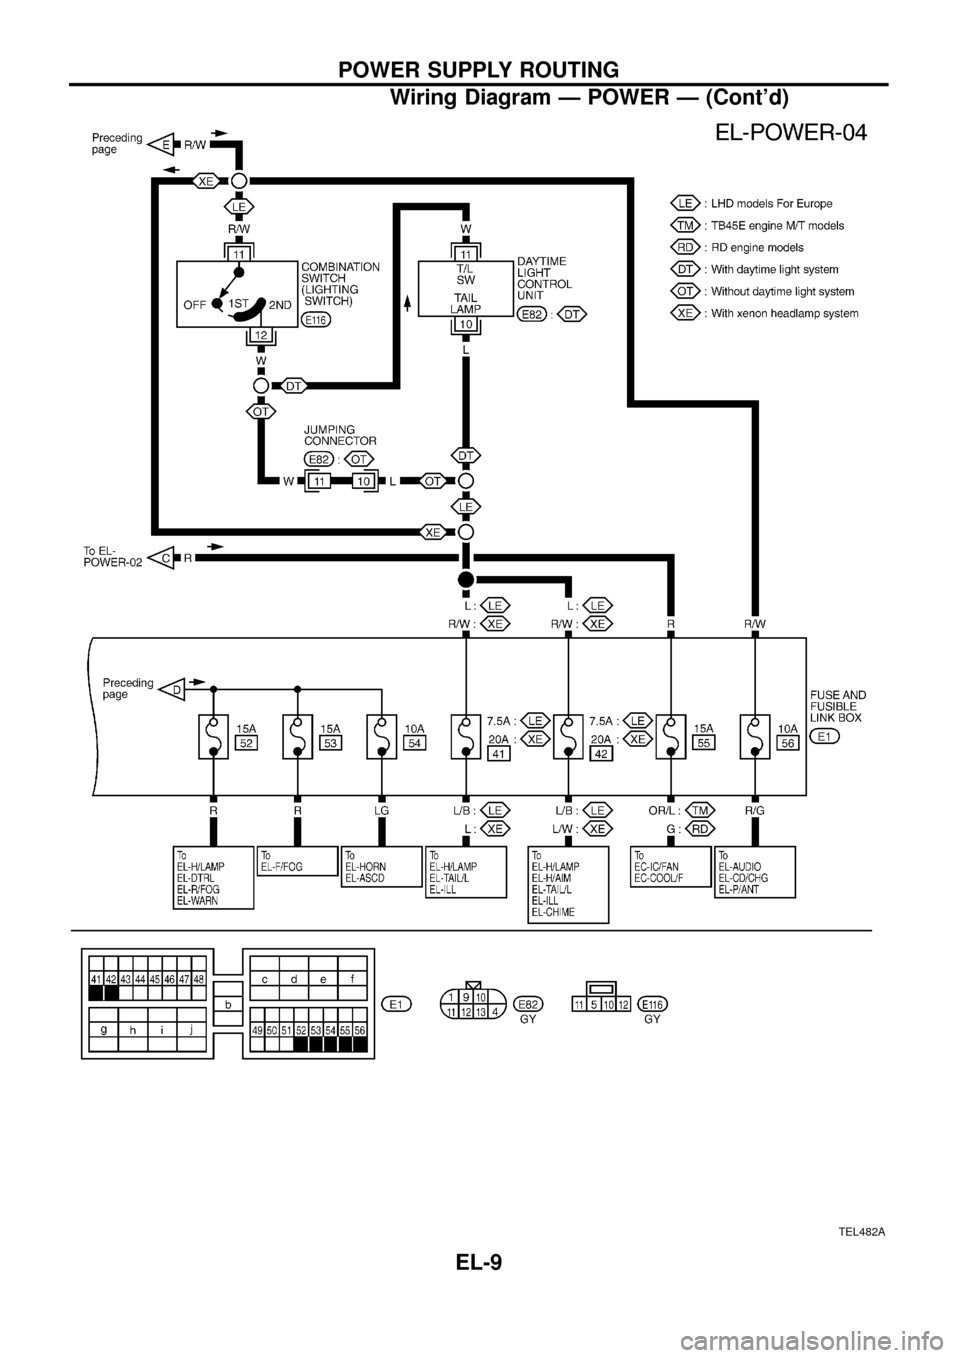 NISSAN PATROL 1998 Y61 / 5.G Electrical System User Guide TEL482A
POWER SUPPLY ROUTING
Wiring Diagram Ð POWER Ð (Contd)
EL-9 